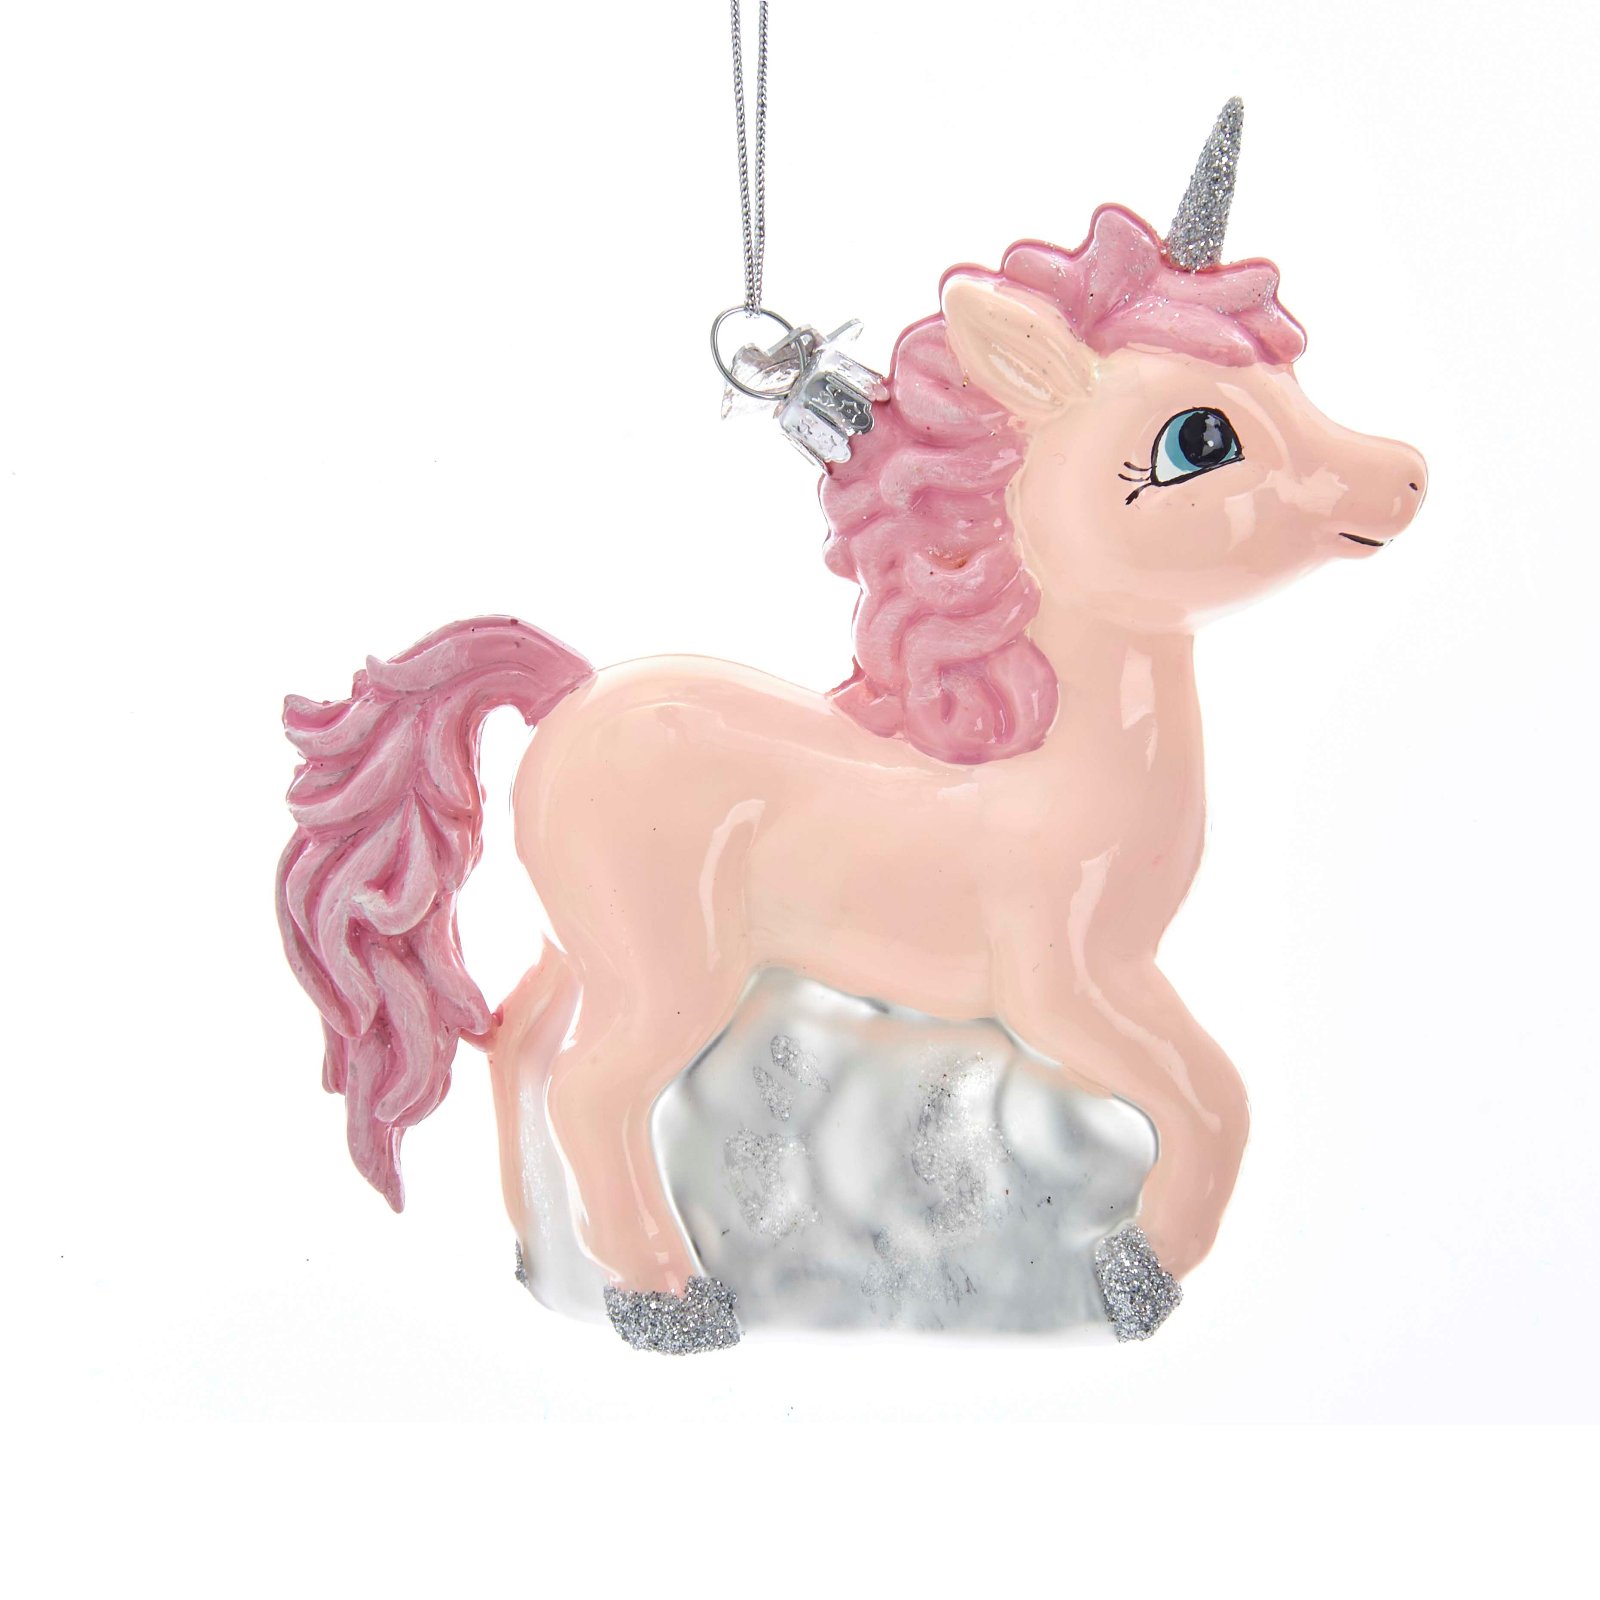 Kurt S. Adler Noble Gems Pink Baby Unicorn Pony Christmas Holiday Ornament 4.75 Inches